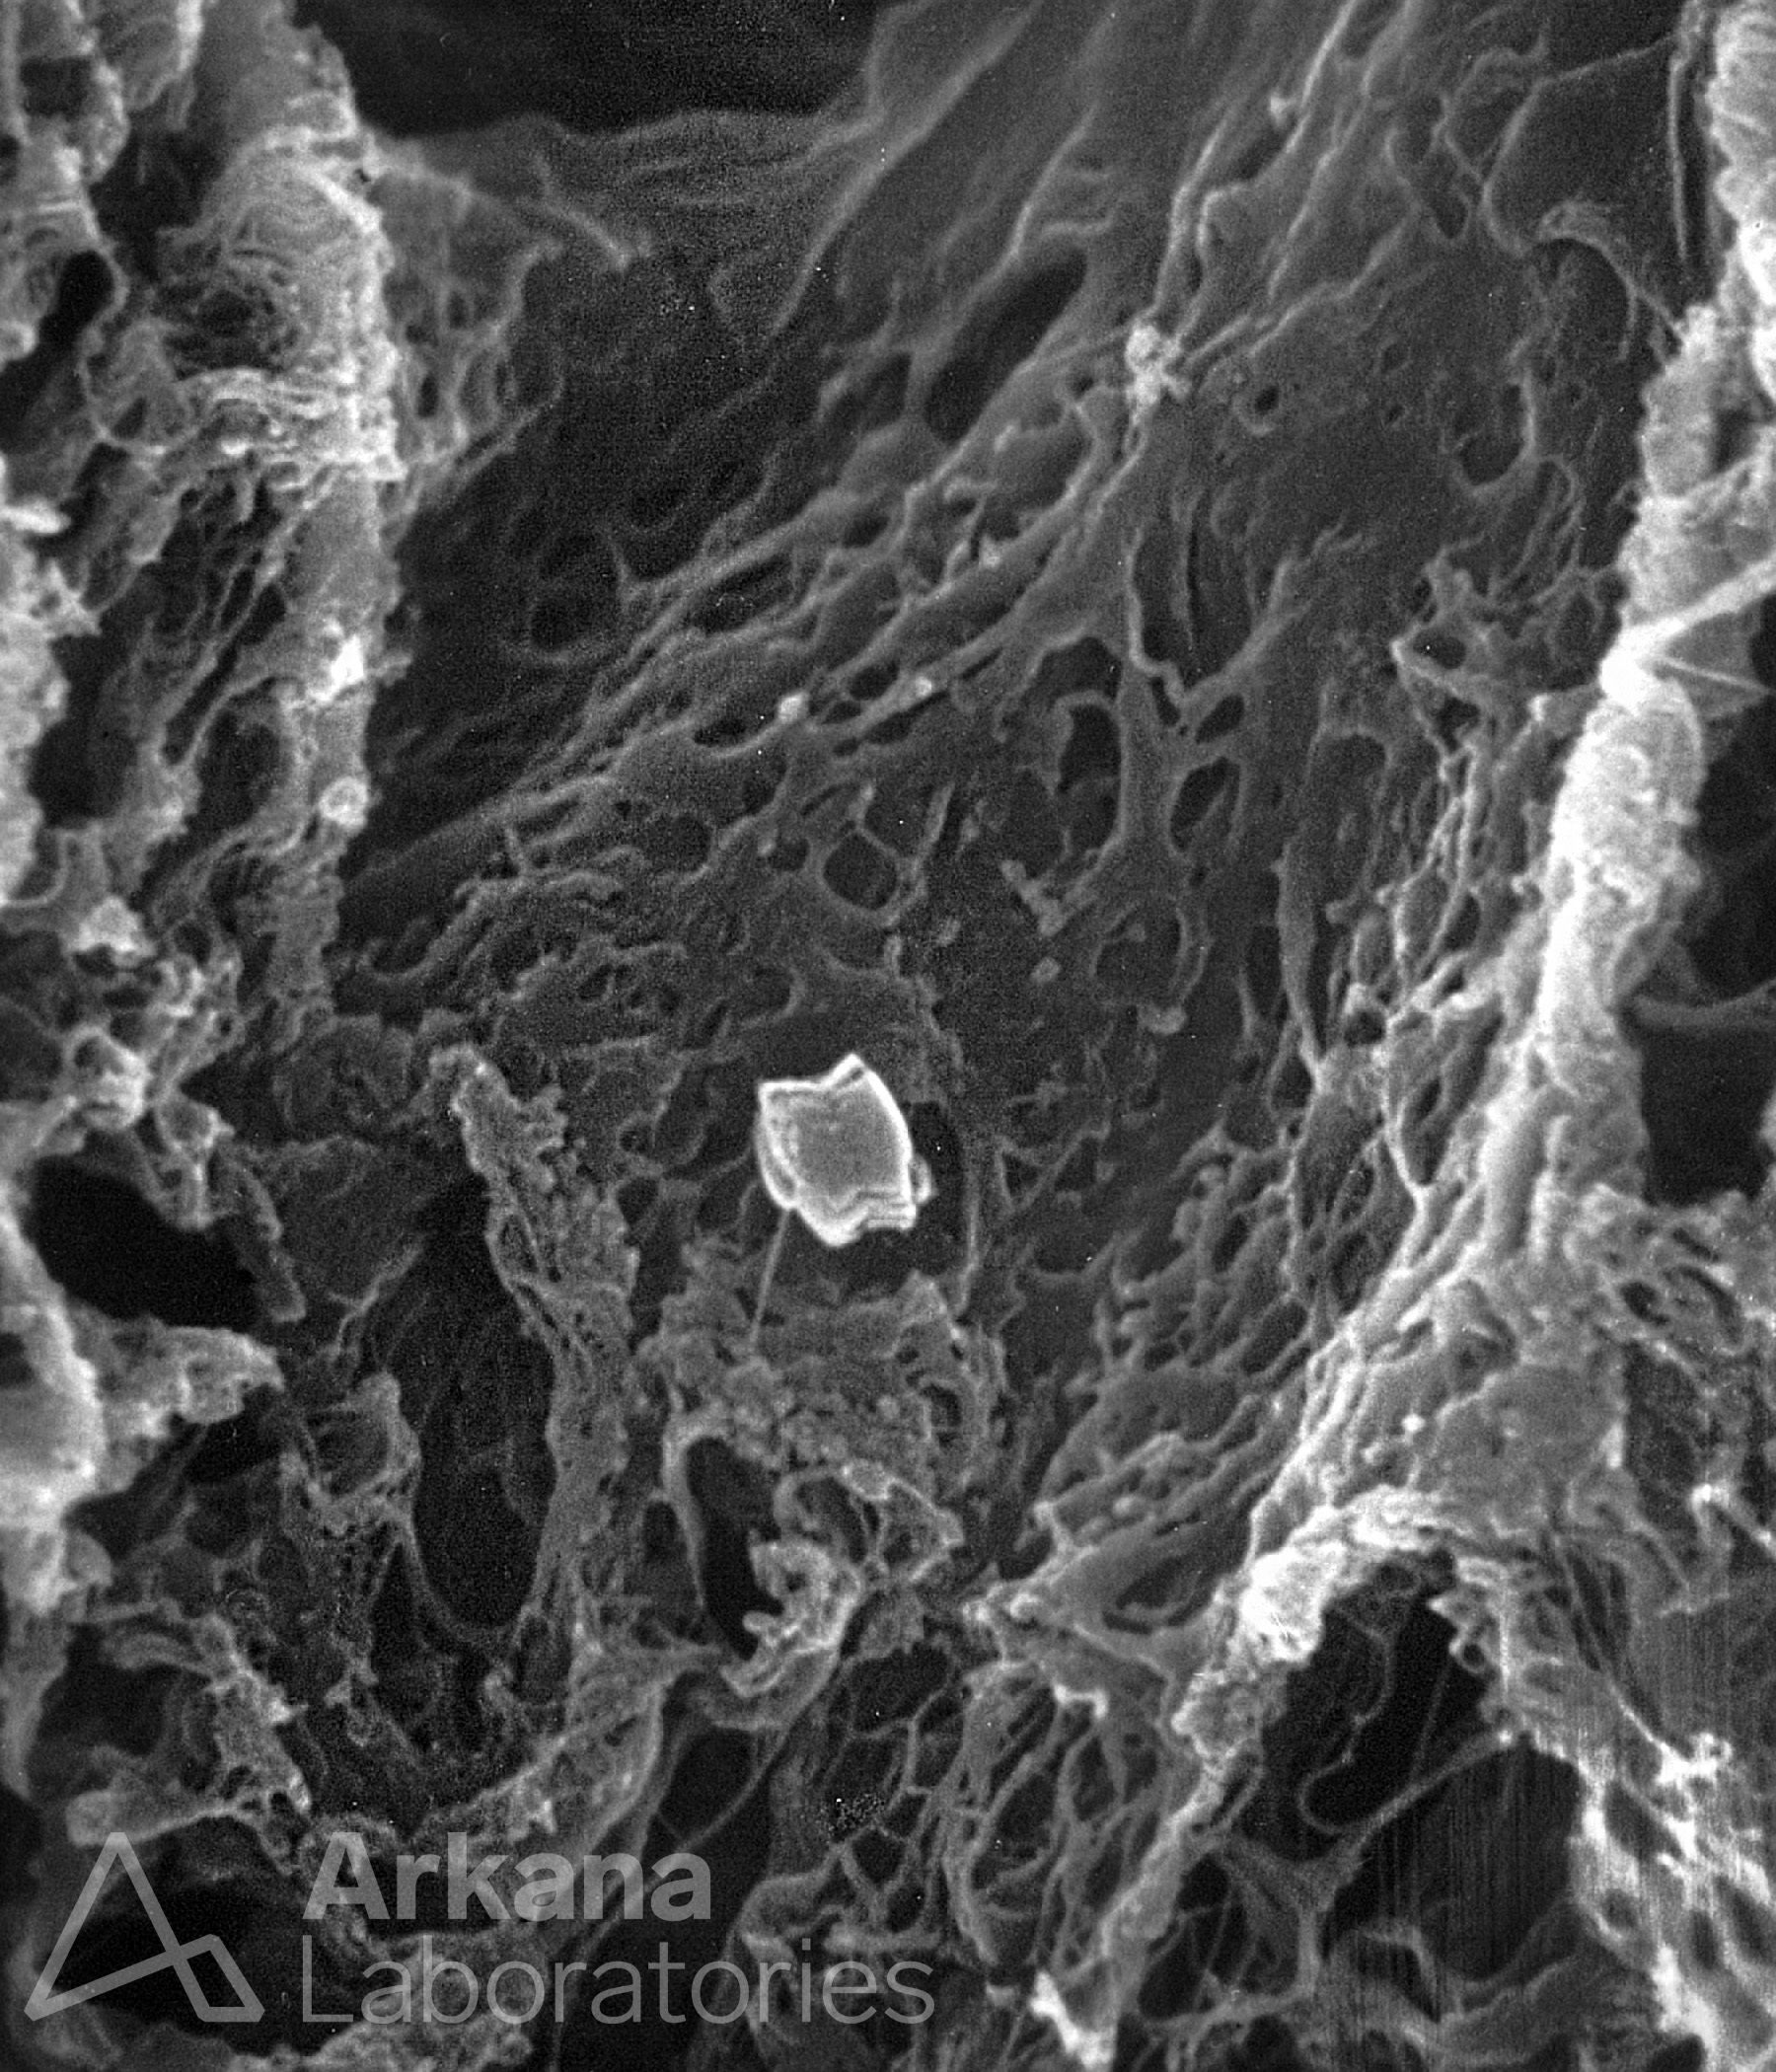 Electron microscopy image showing Macula Densa Basement Membrane Tunnels